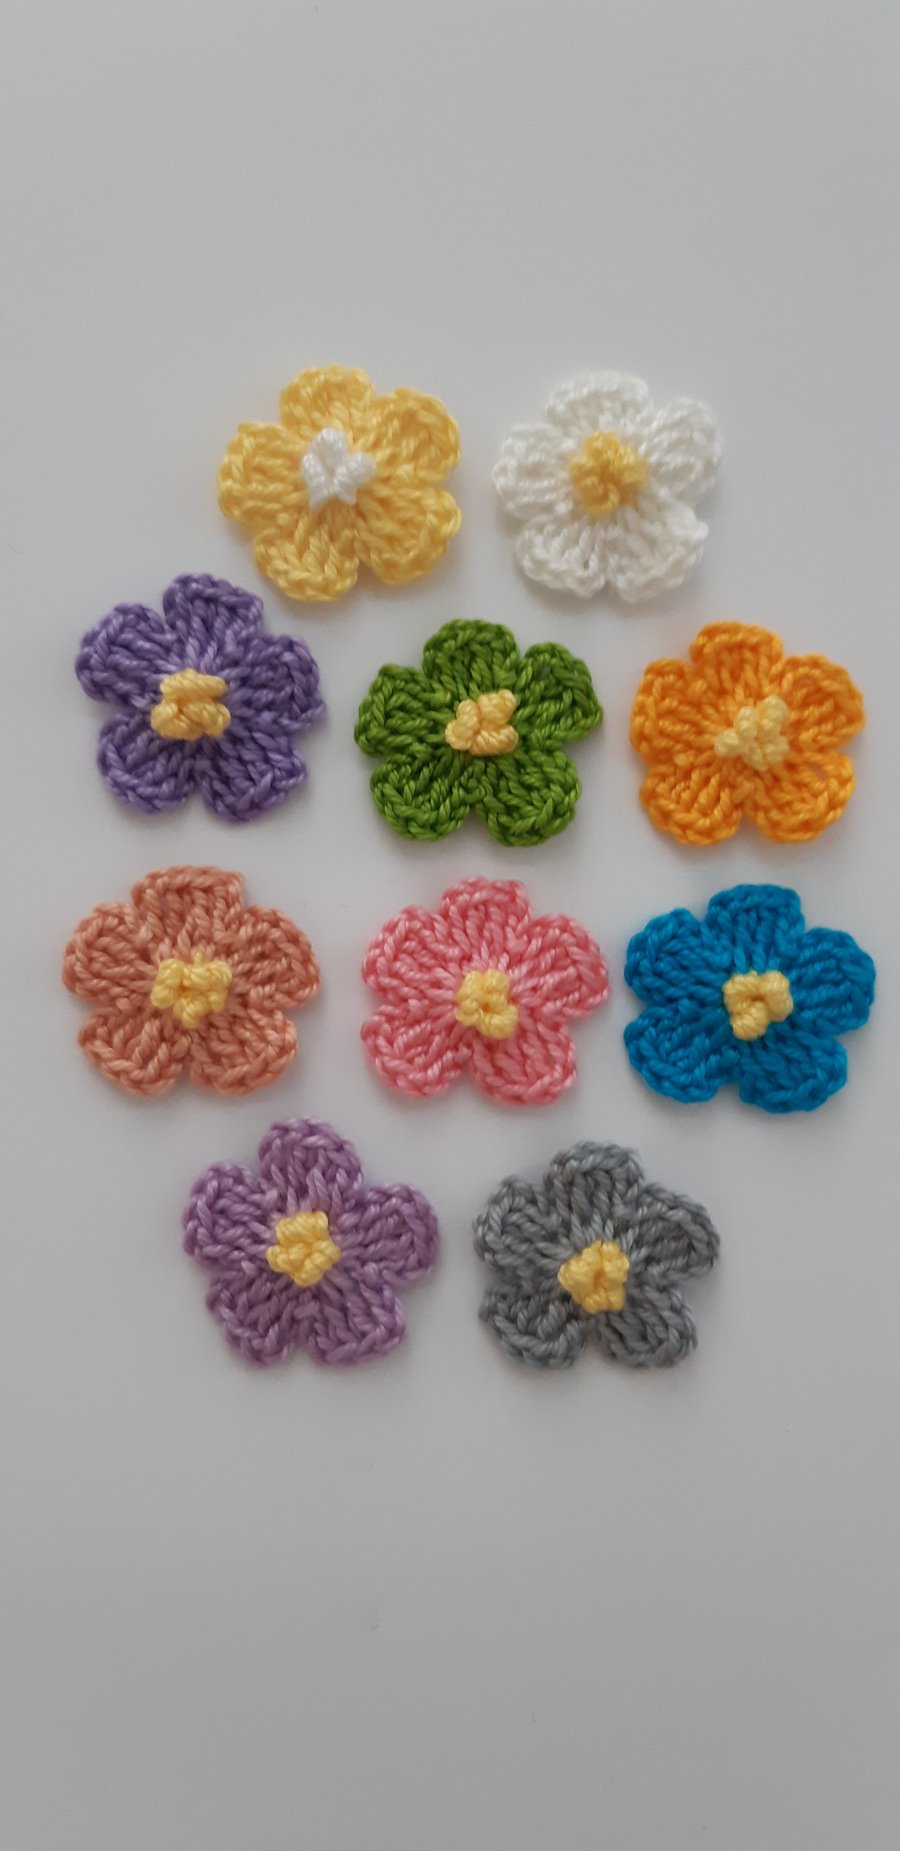 10x Small crochet flowers- Embellishments- Crafts